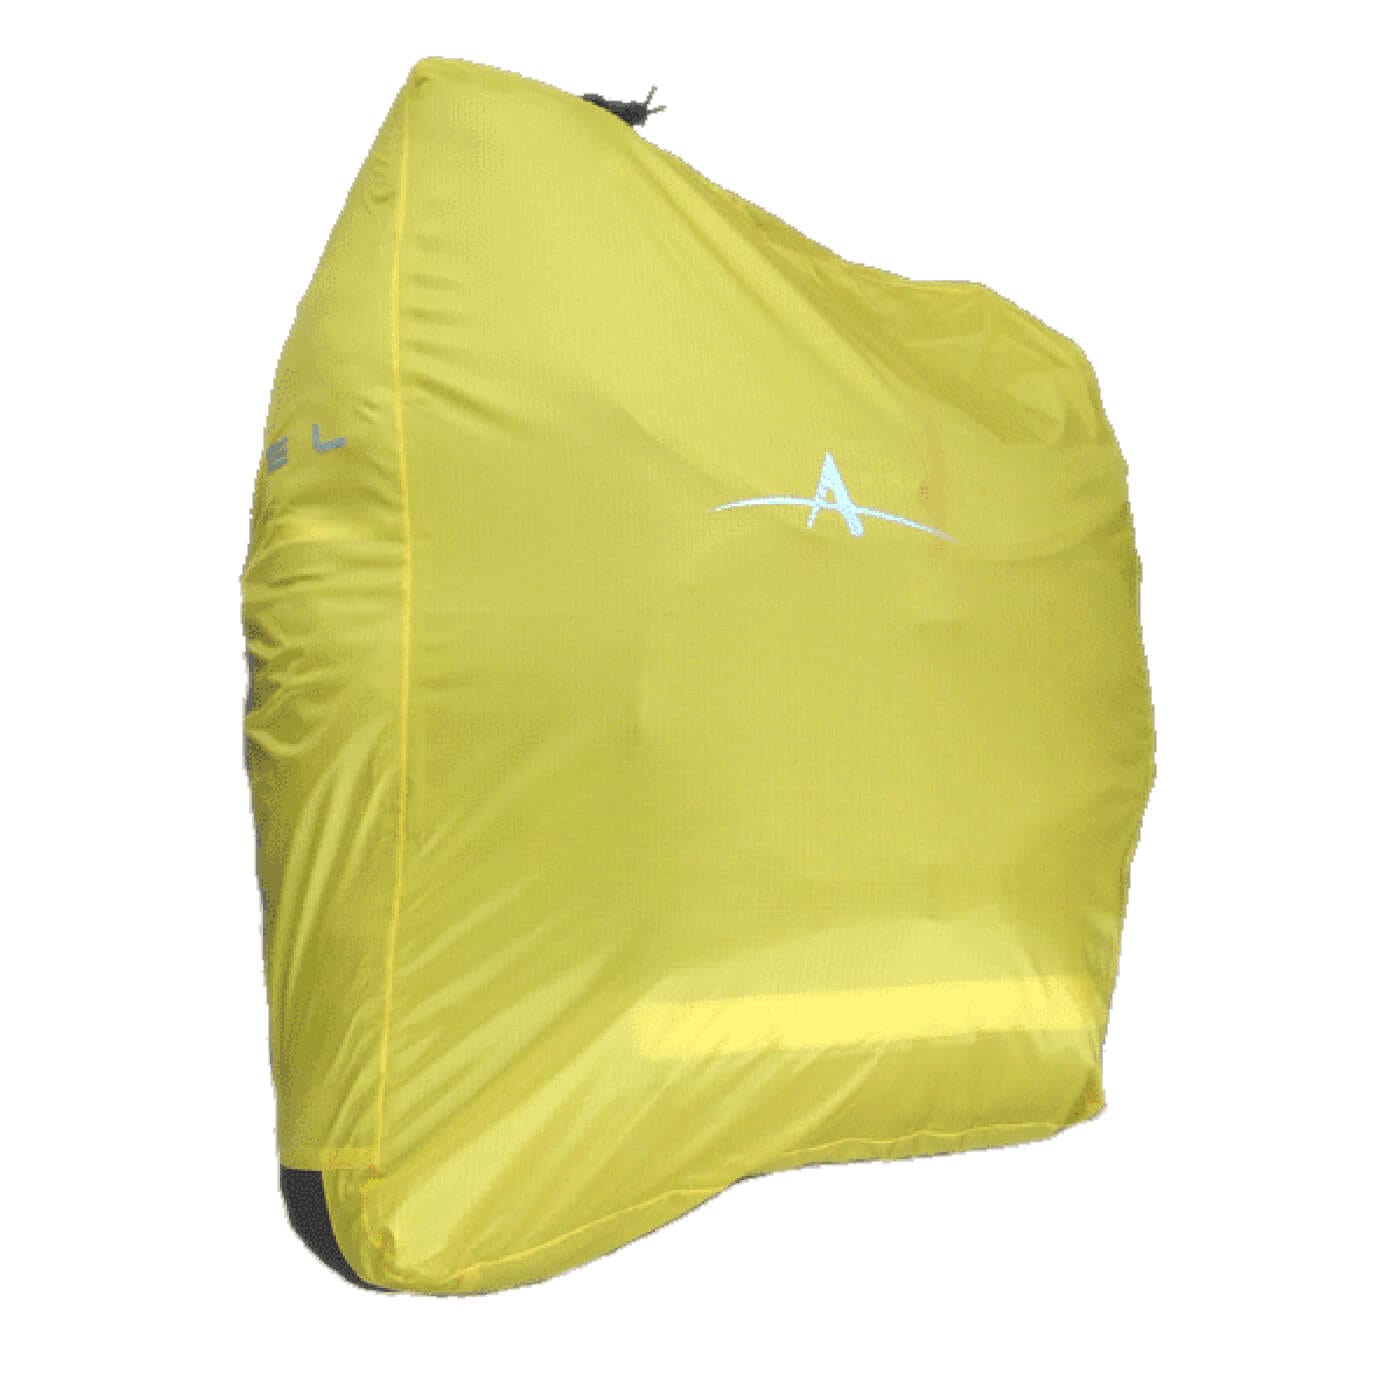 Arkel Bike Bags Yellow / XL Waterproof Rain Covers